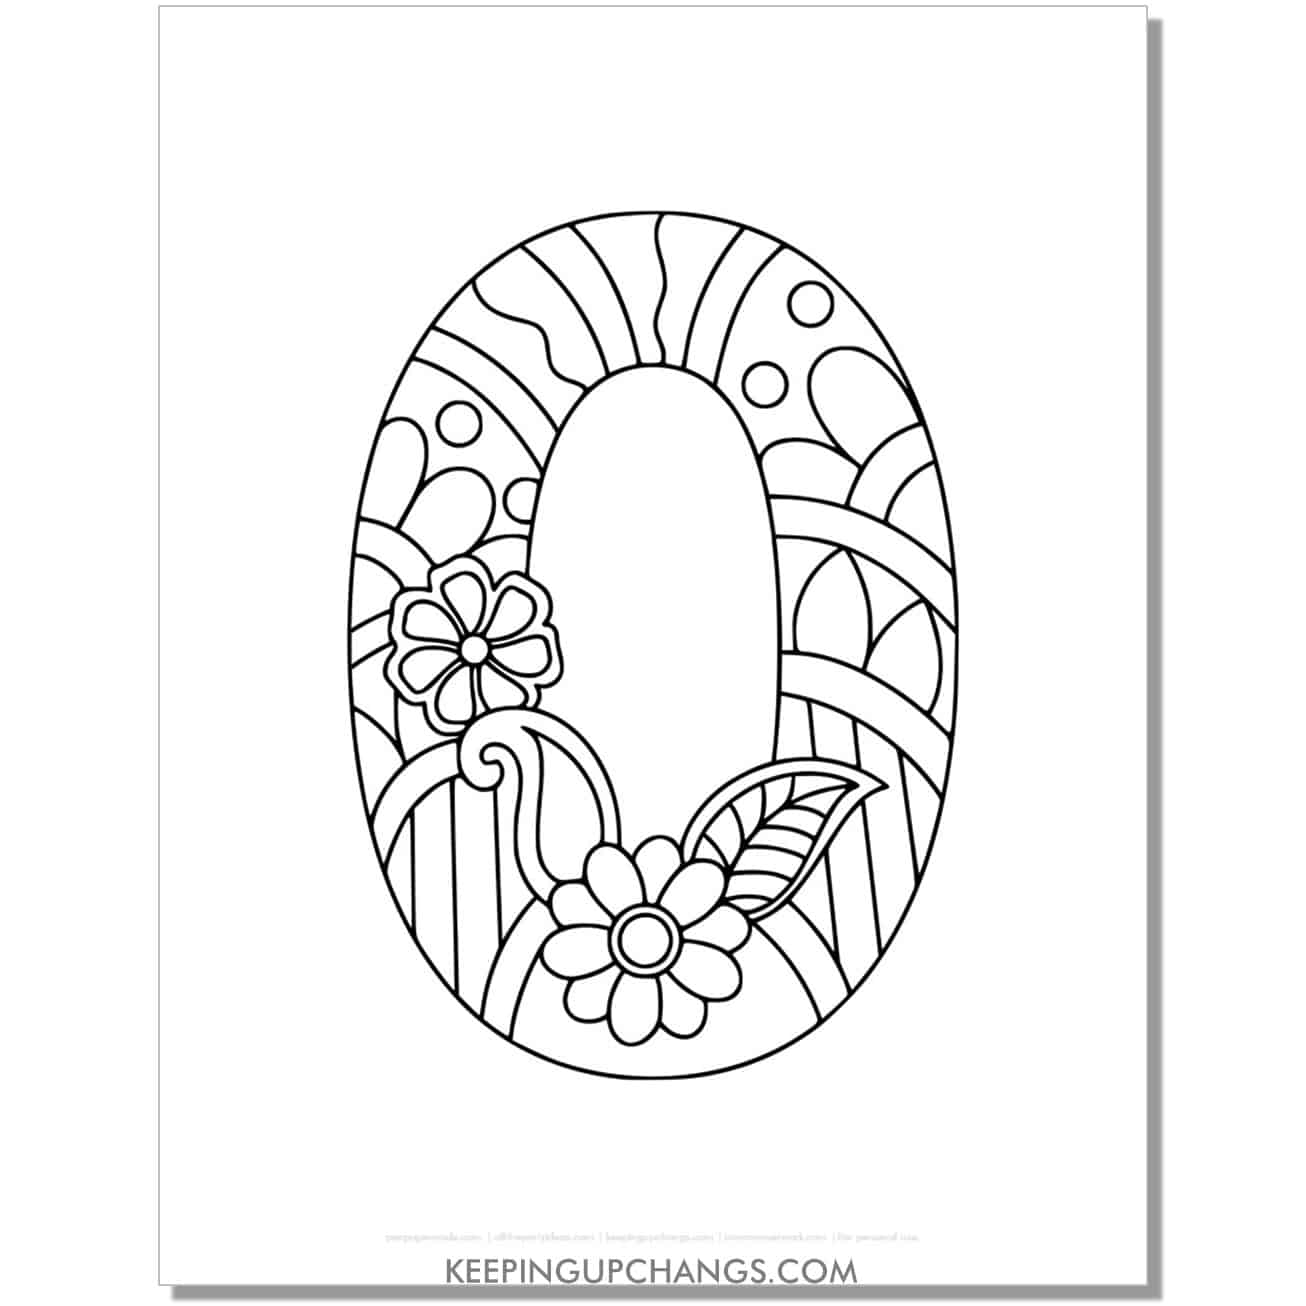 free alphabet o to color, intricate flower mandala zentangle.